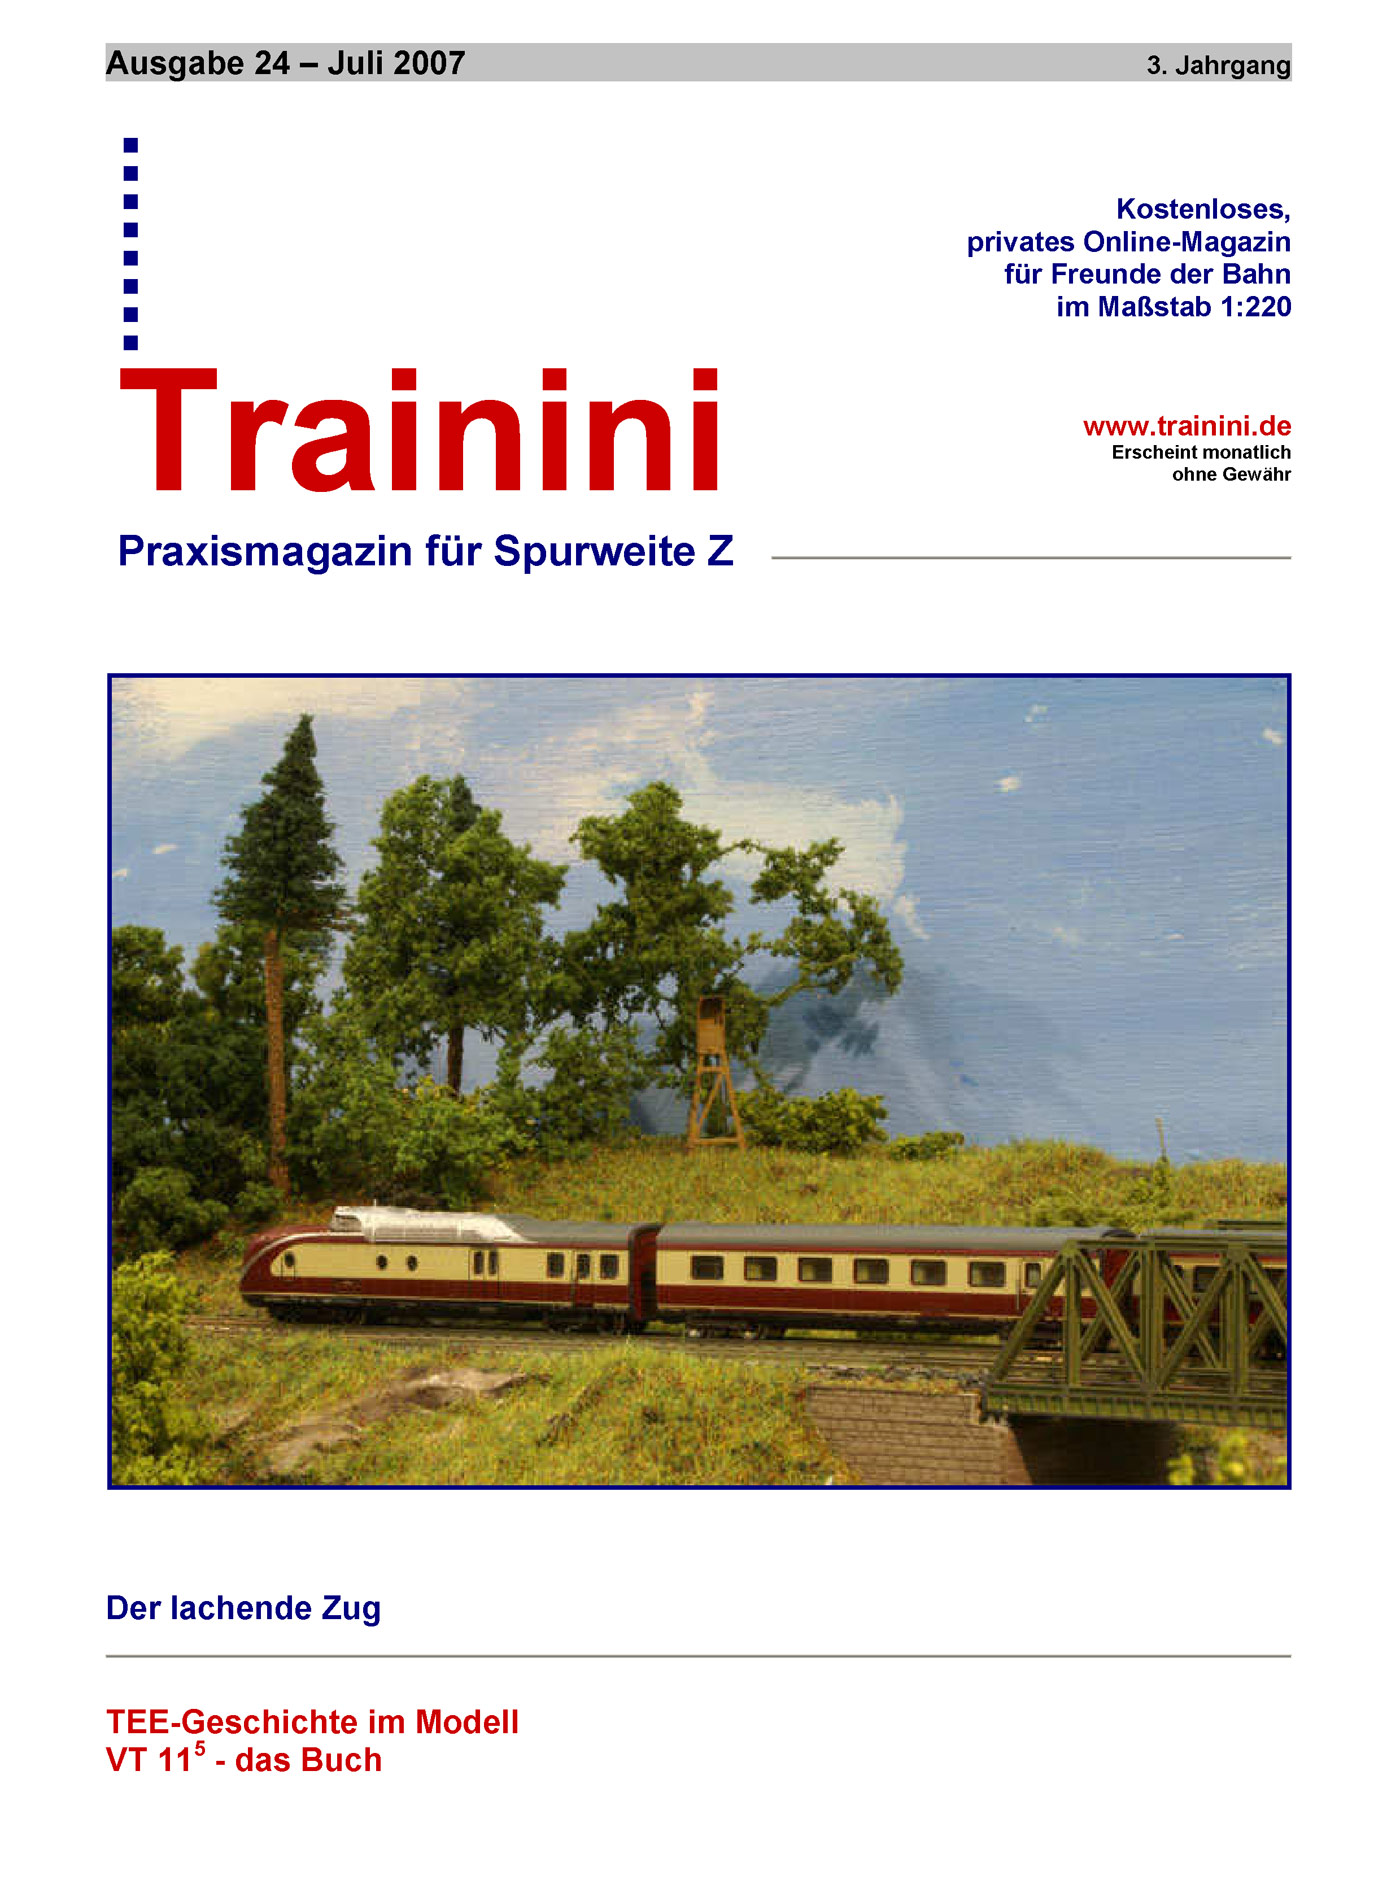 Trainini Ausgabe Juli 2007